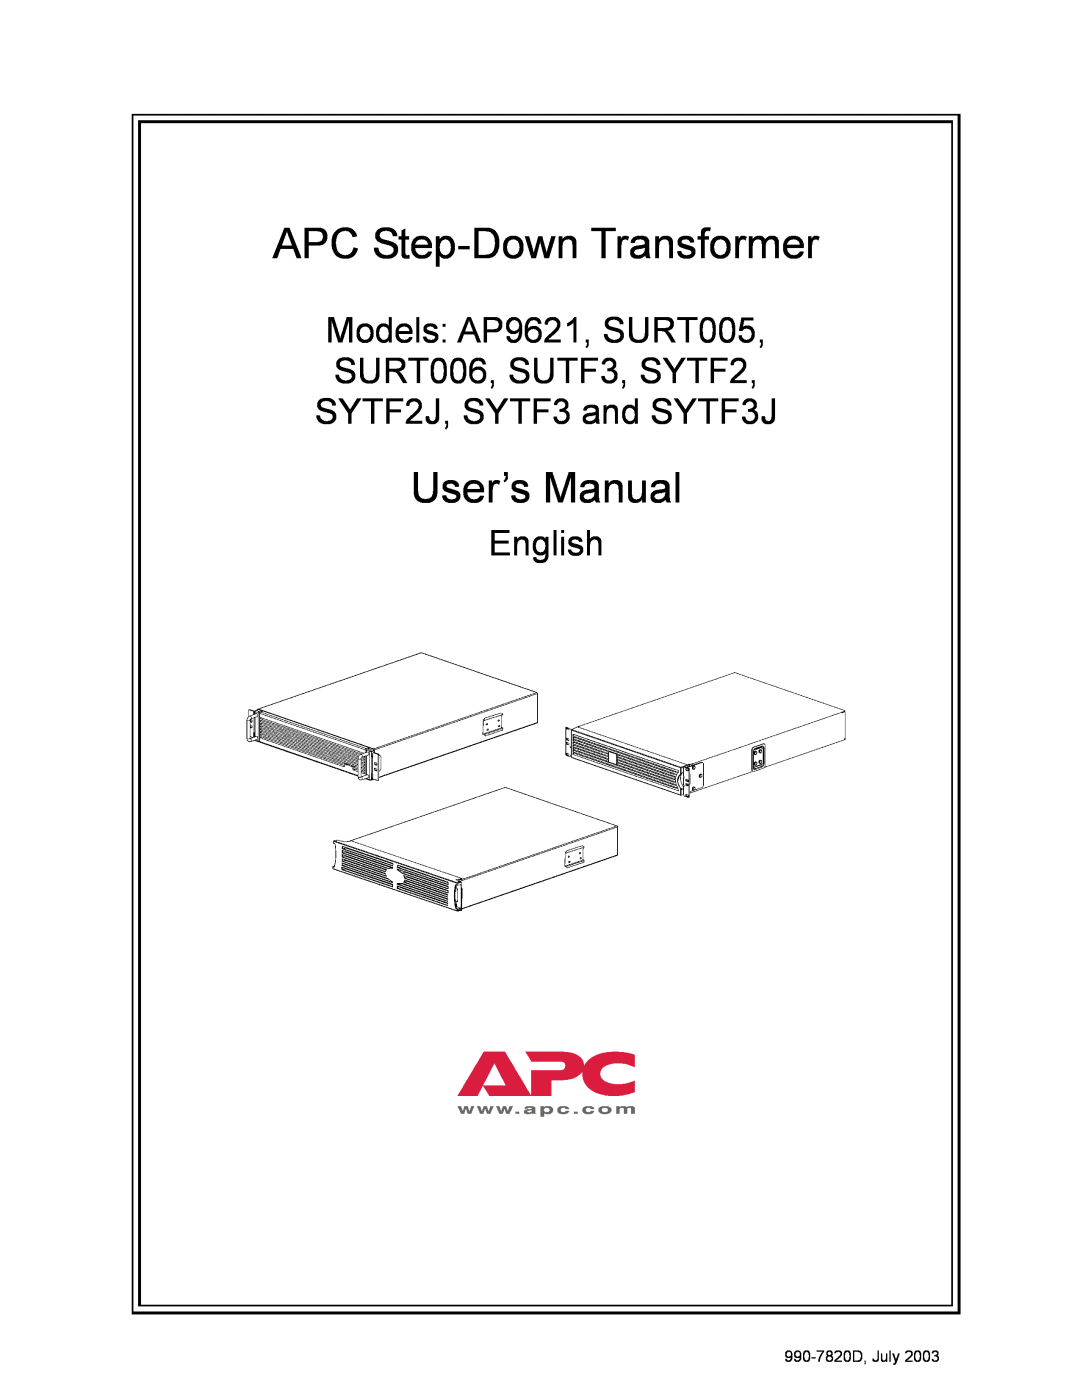 American Power Conversion SURT005, SURT006, AP9621, SYTF2J user manual APC Step-Down Transformer, User’s Manual, English 